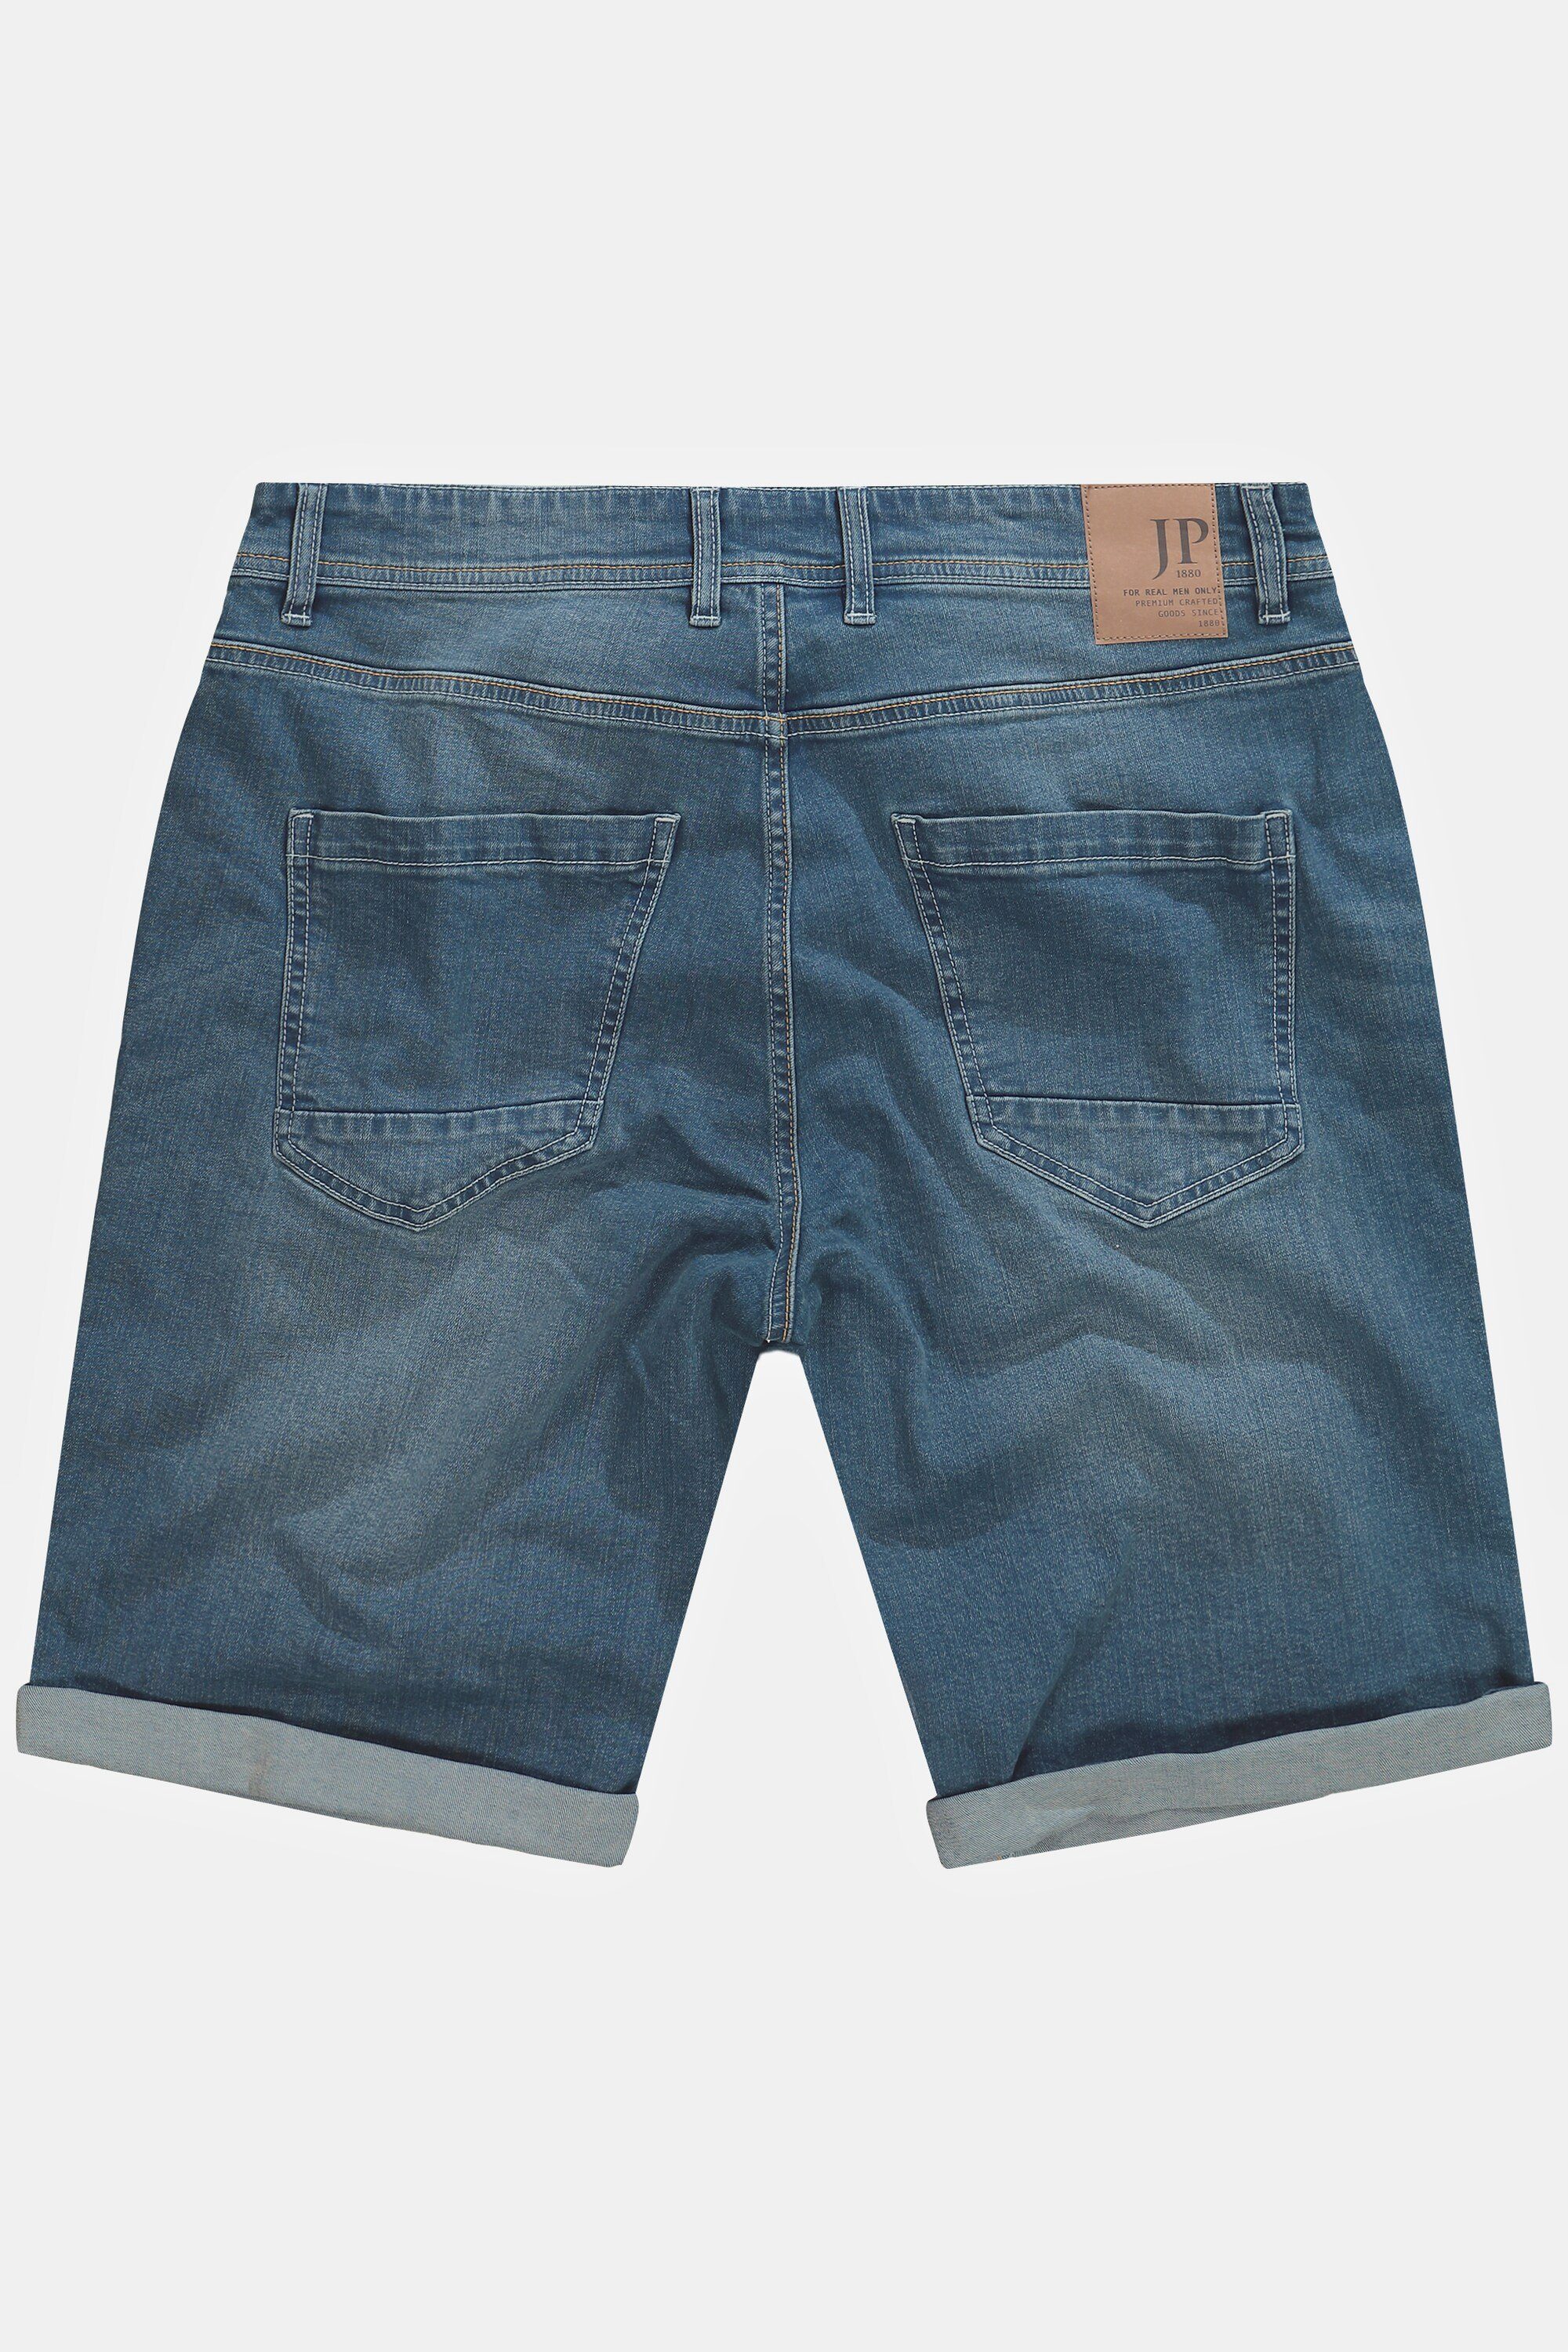 JP1880 Jeansbermudas 5-Pocket Jeans blue Bauchfit Bermuda denim High-Stretch